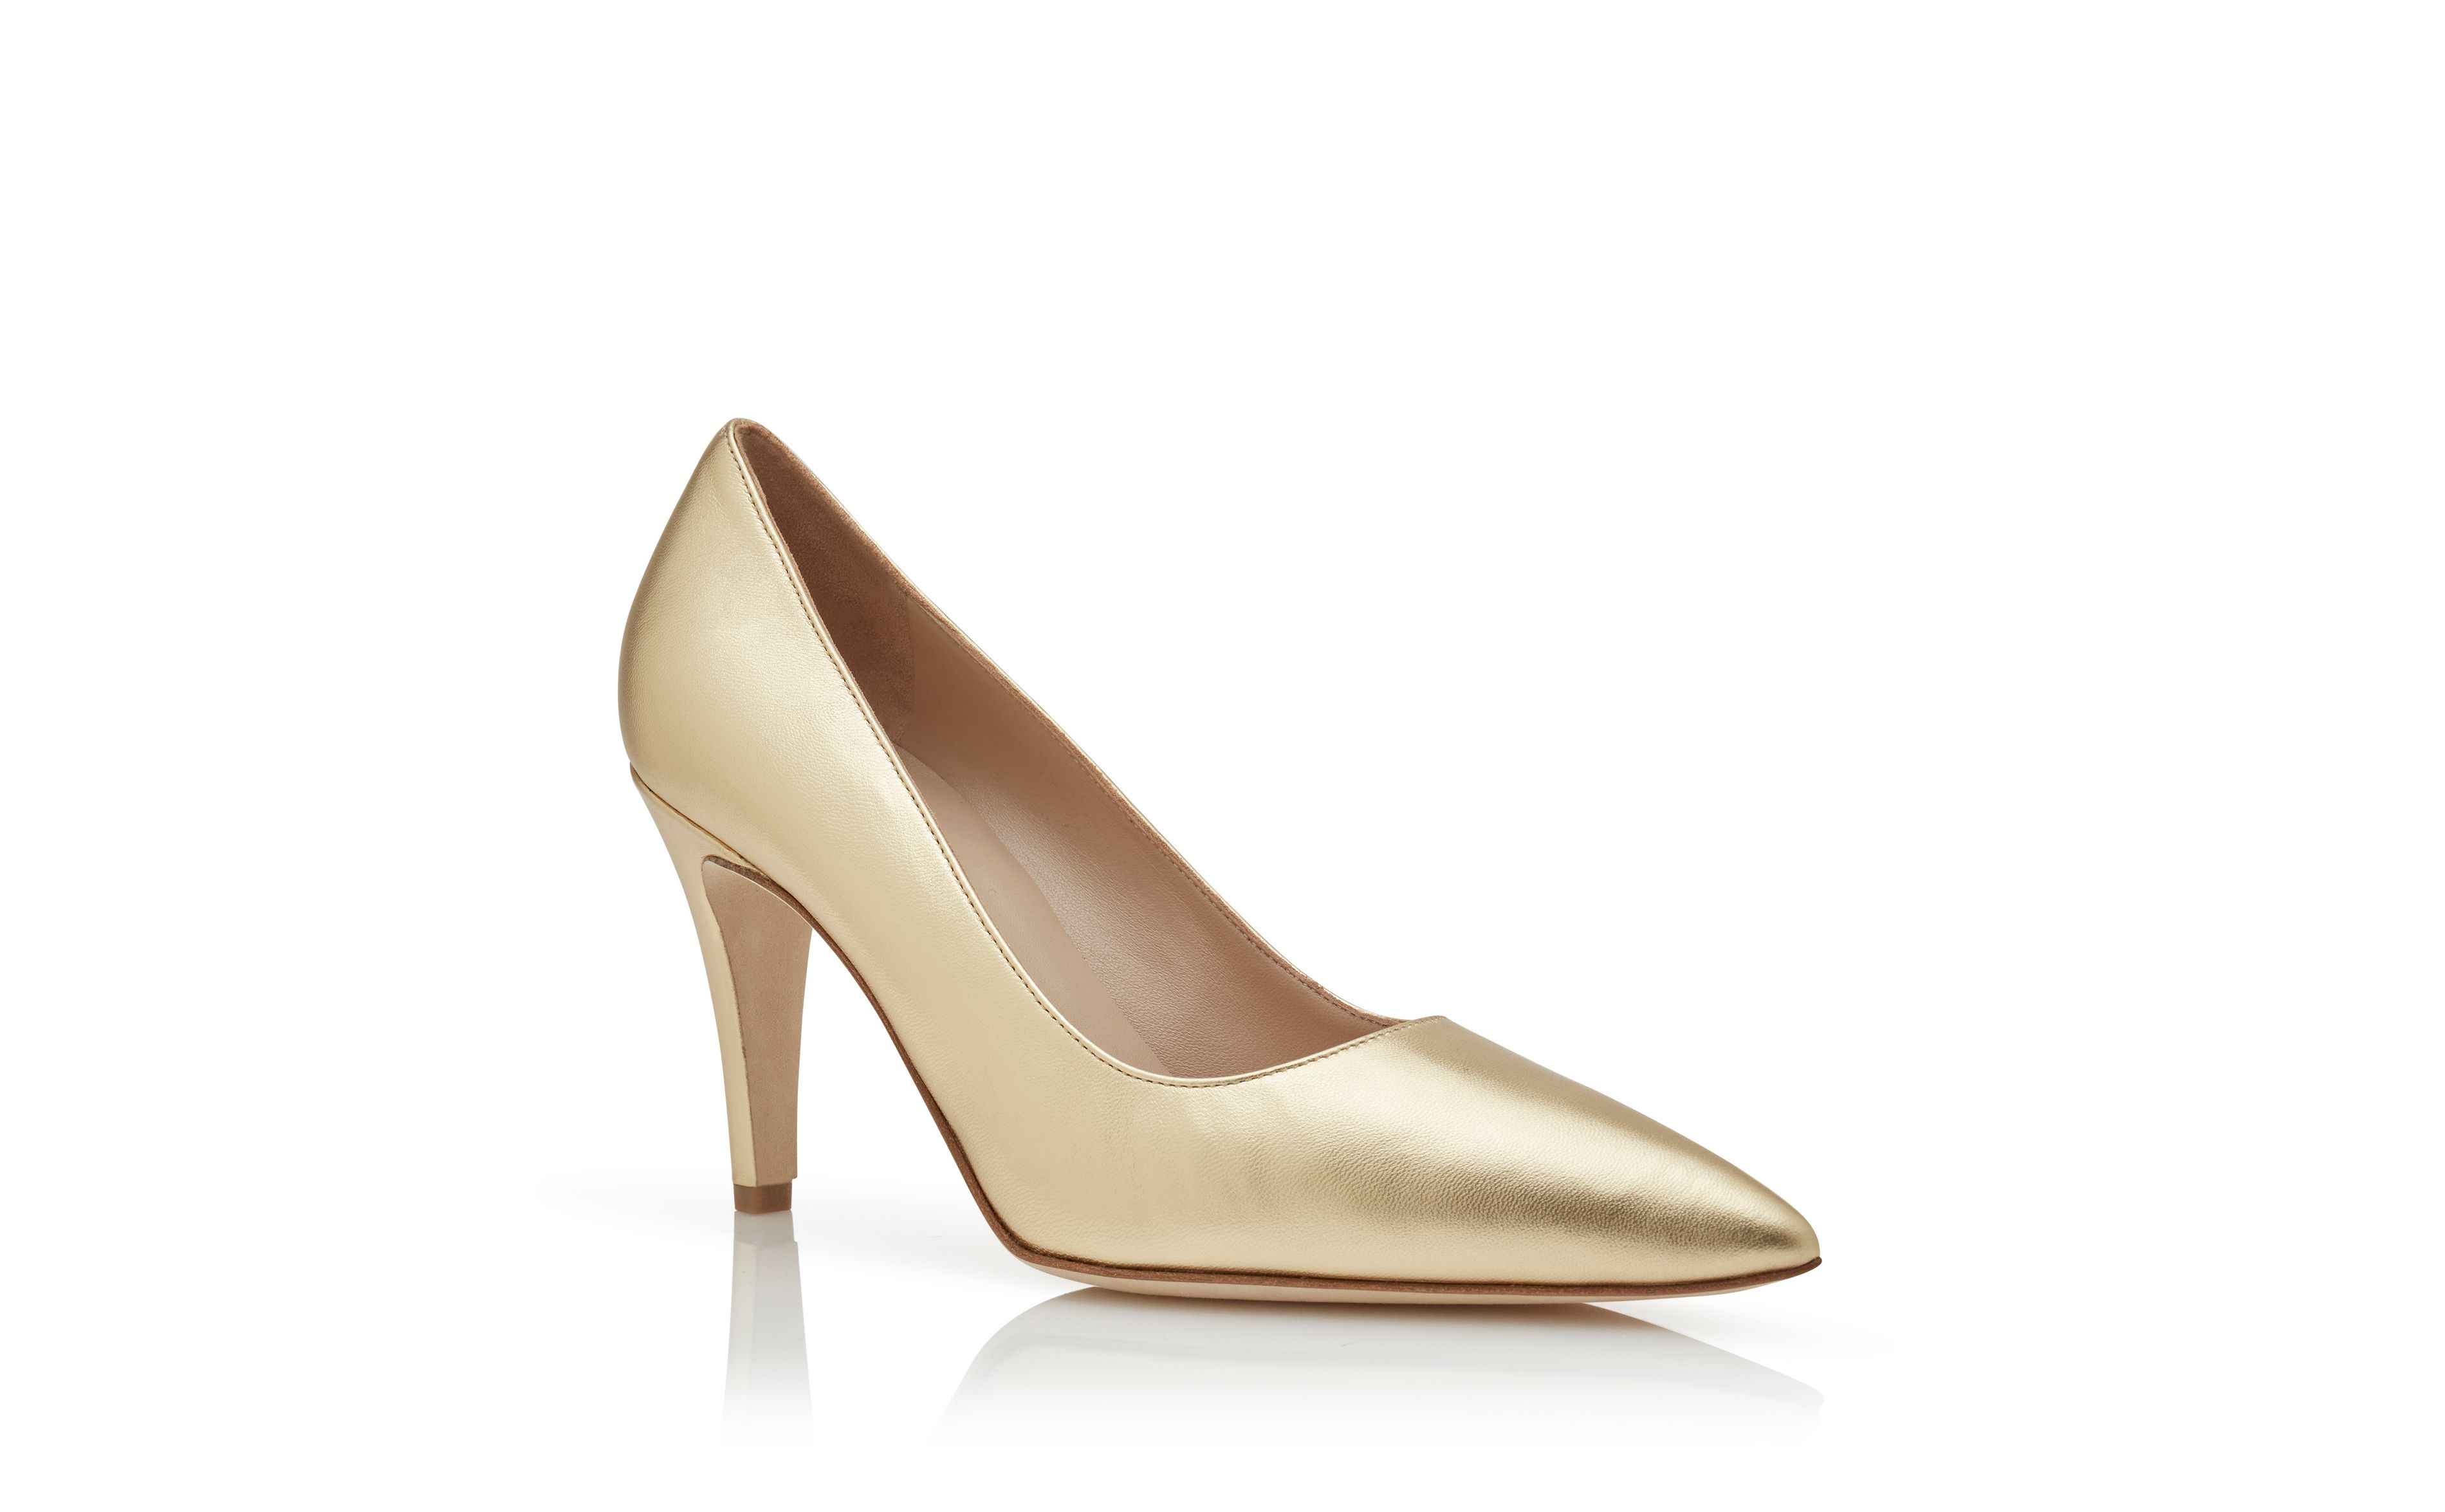 Miss Selfridge grande gold pu closed toe heel | ASOS